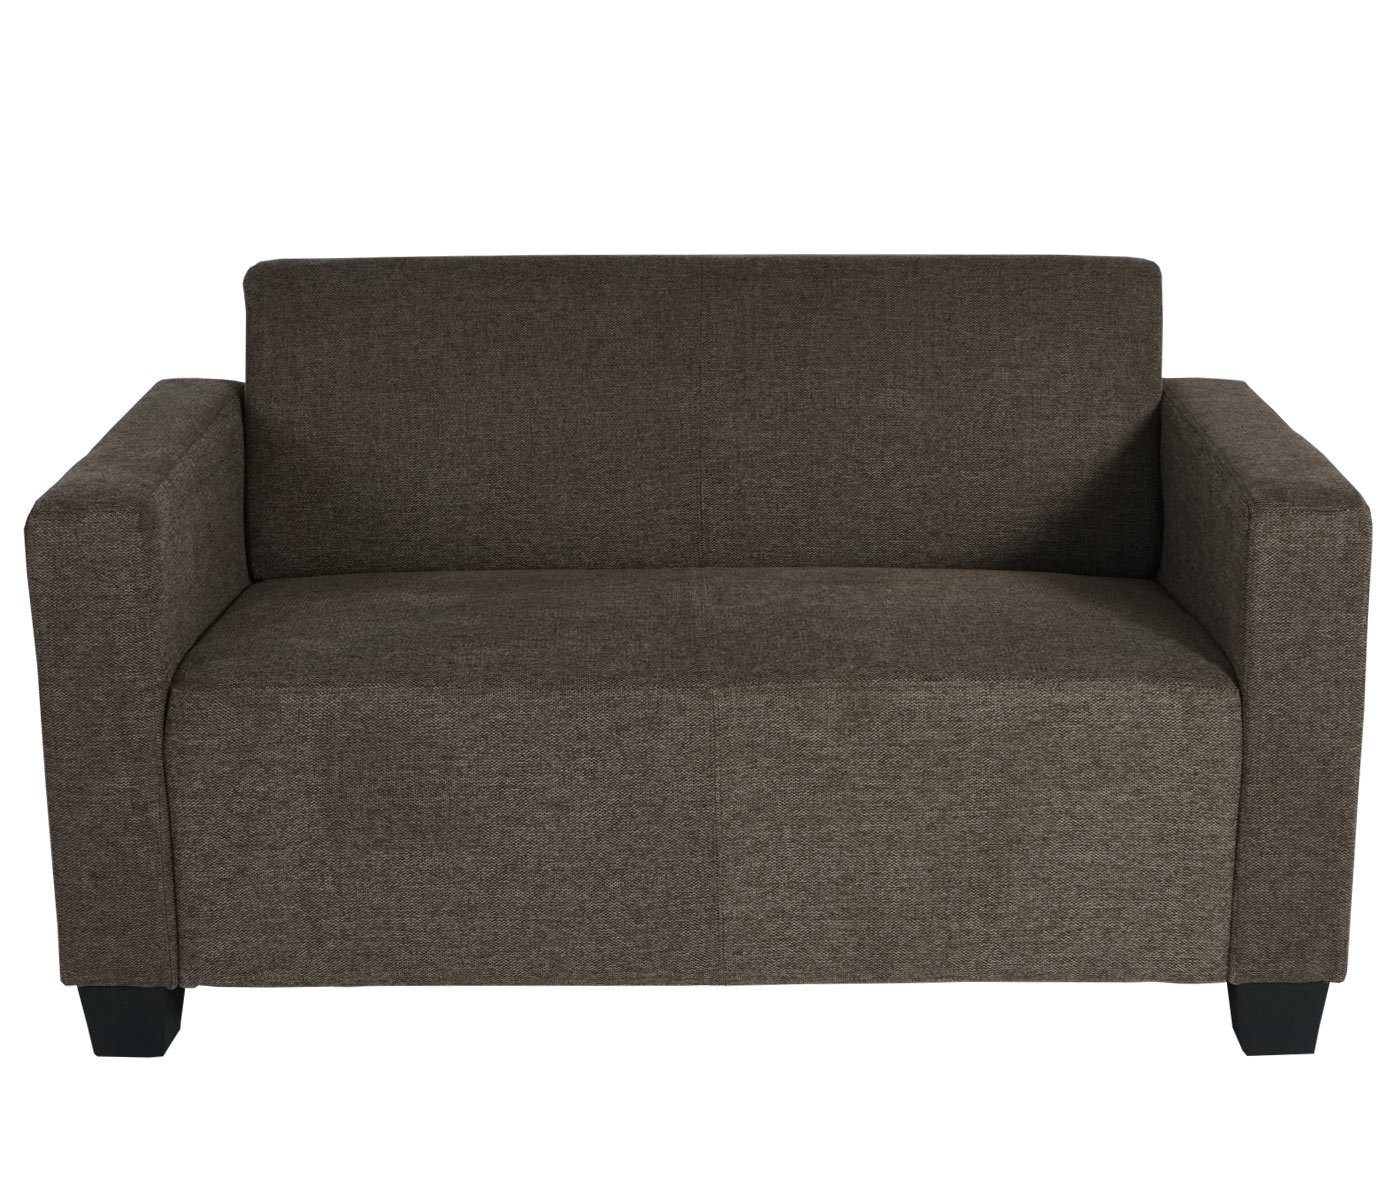 | MCW 2 Bequeme braun Sitzpolsterung 2er kg Moncalieri-2-2er, Lounge-Stil, Maximal Sofa Teile, braun Moderner 260 Sofa pro